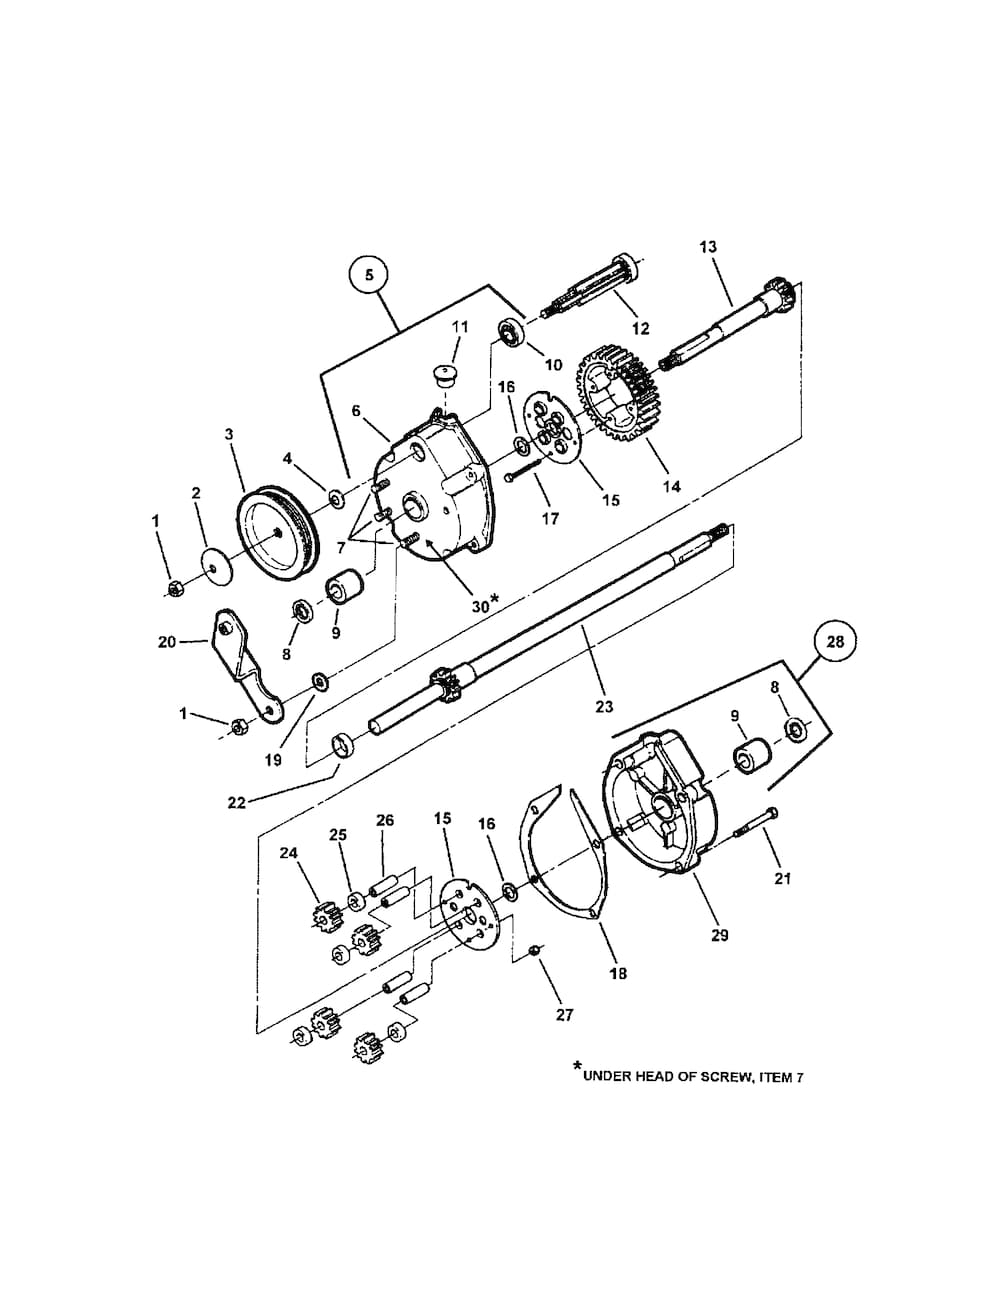 Snapper Lawn Mower Parts List http://parts.sears.com/partsdirect/part ...